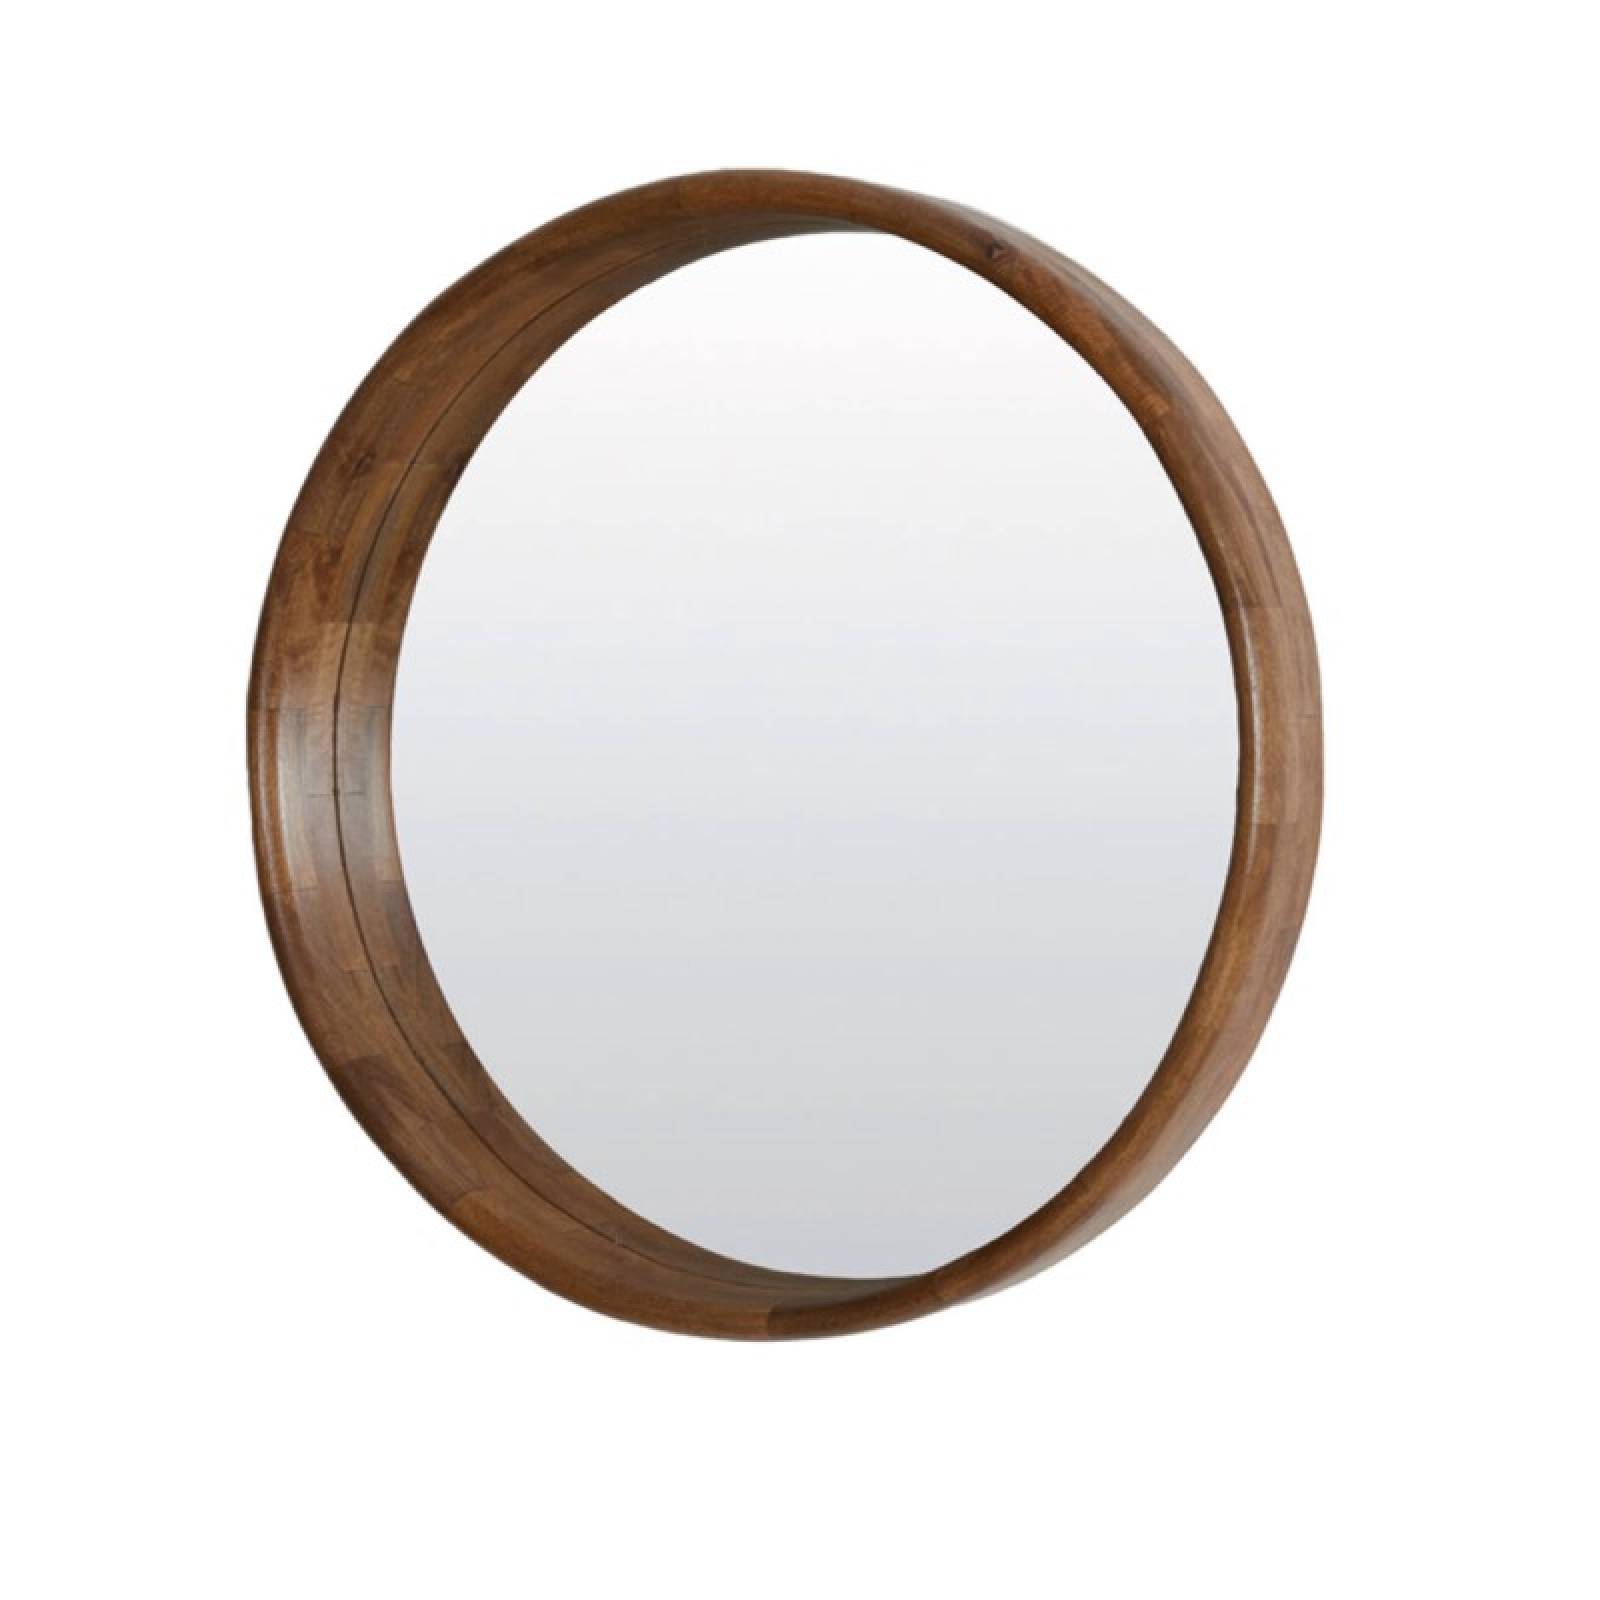 Denahi Wooden Circular Mirror In Oil Brown 80cm thumbnails